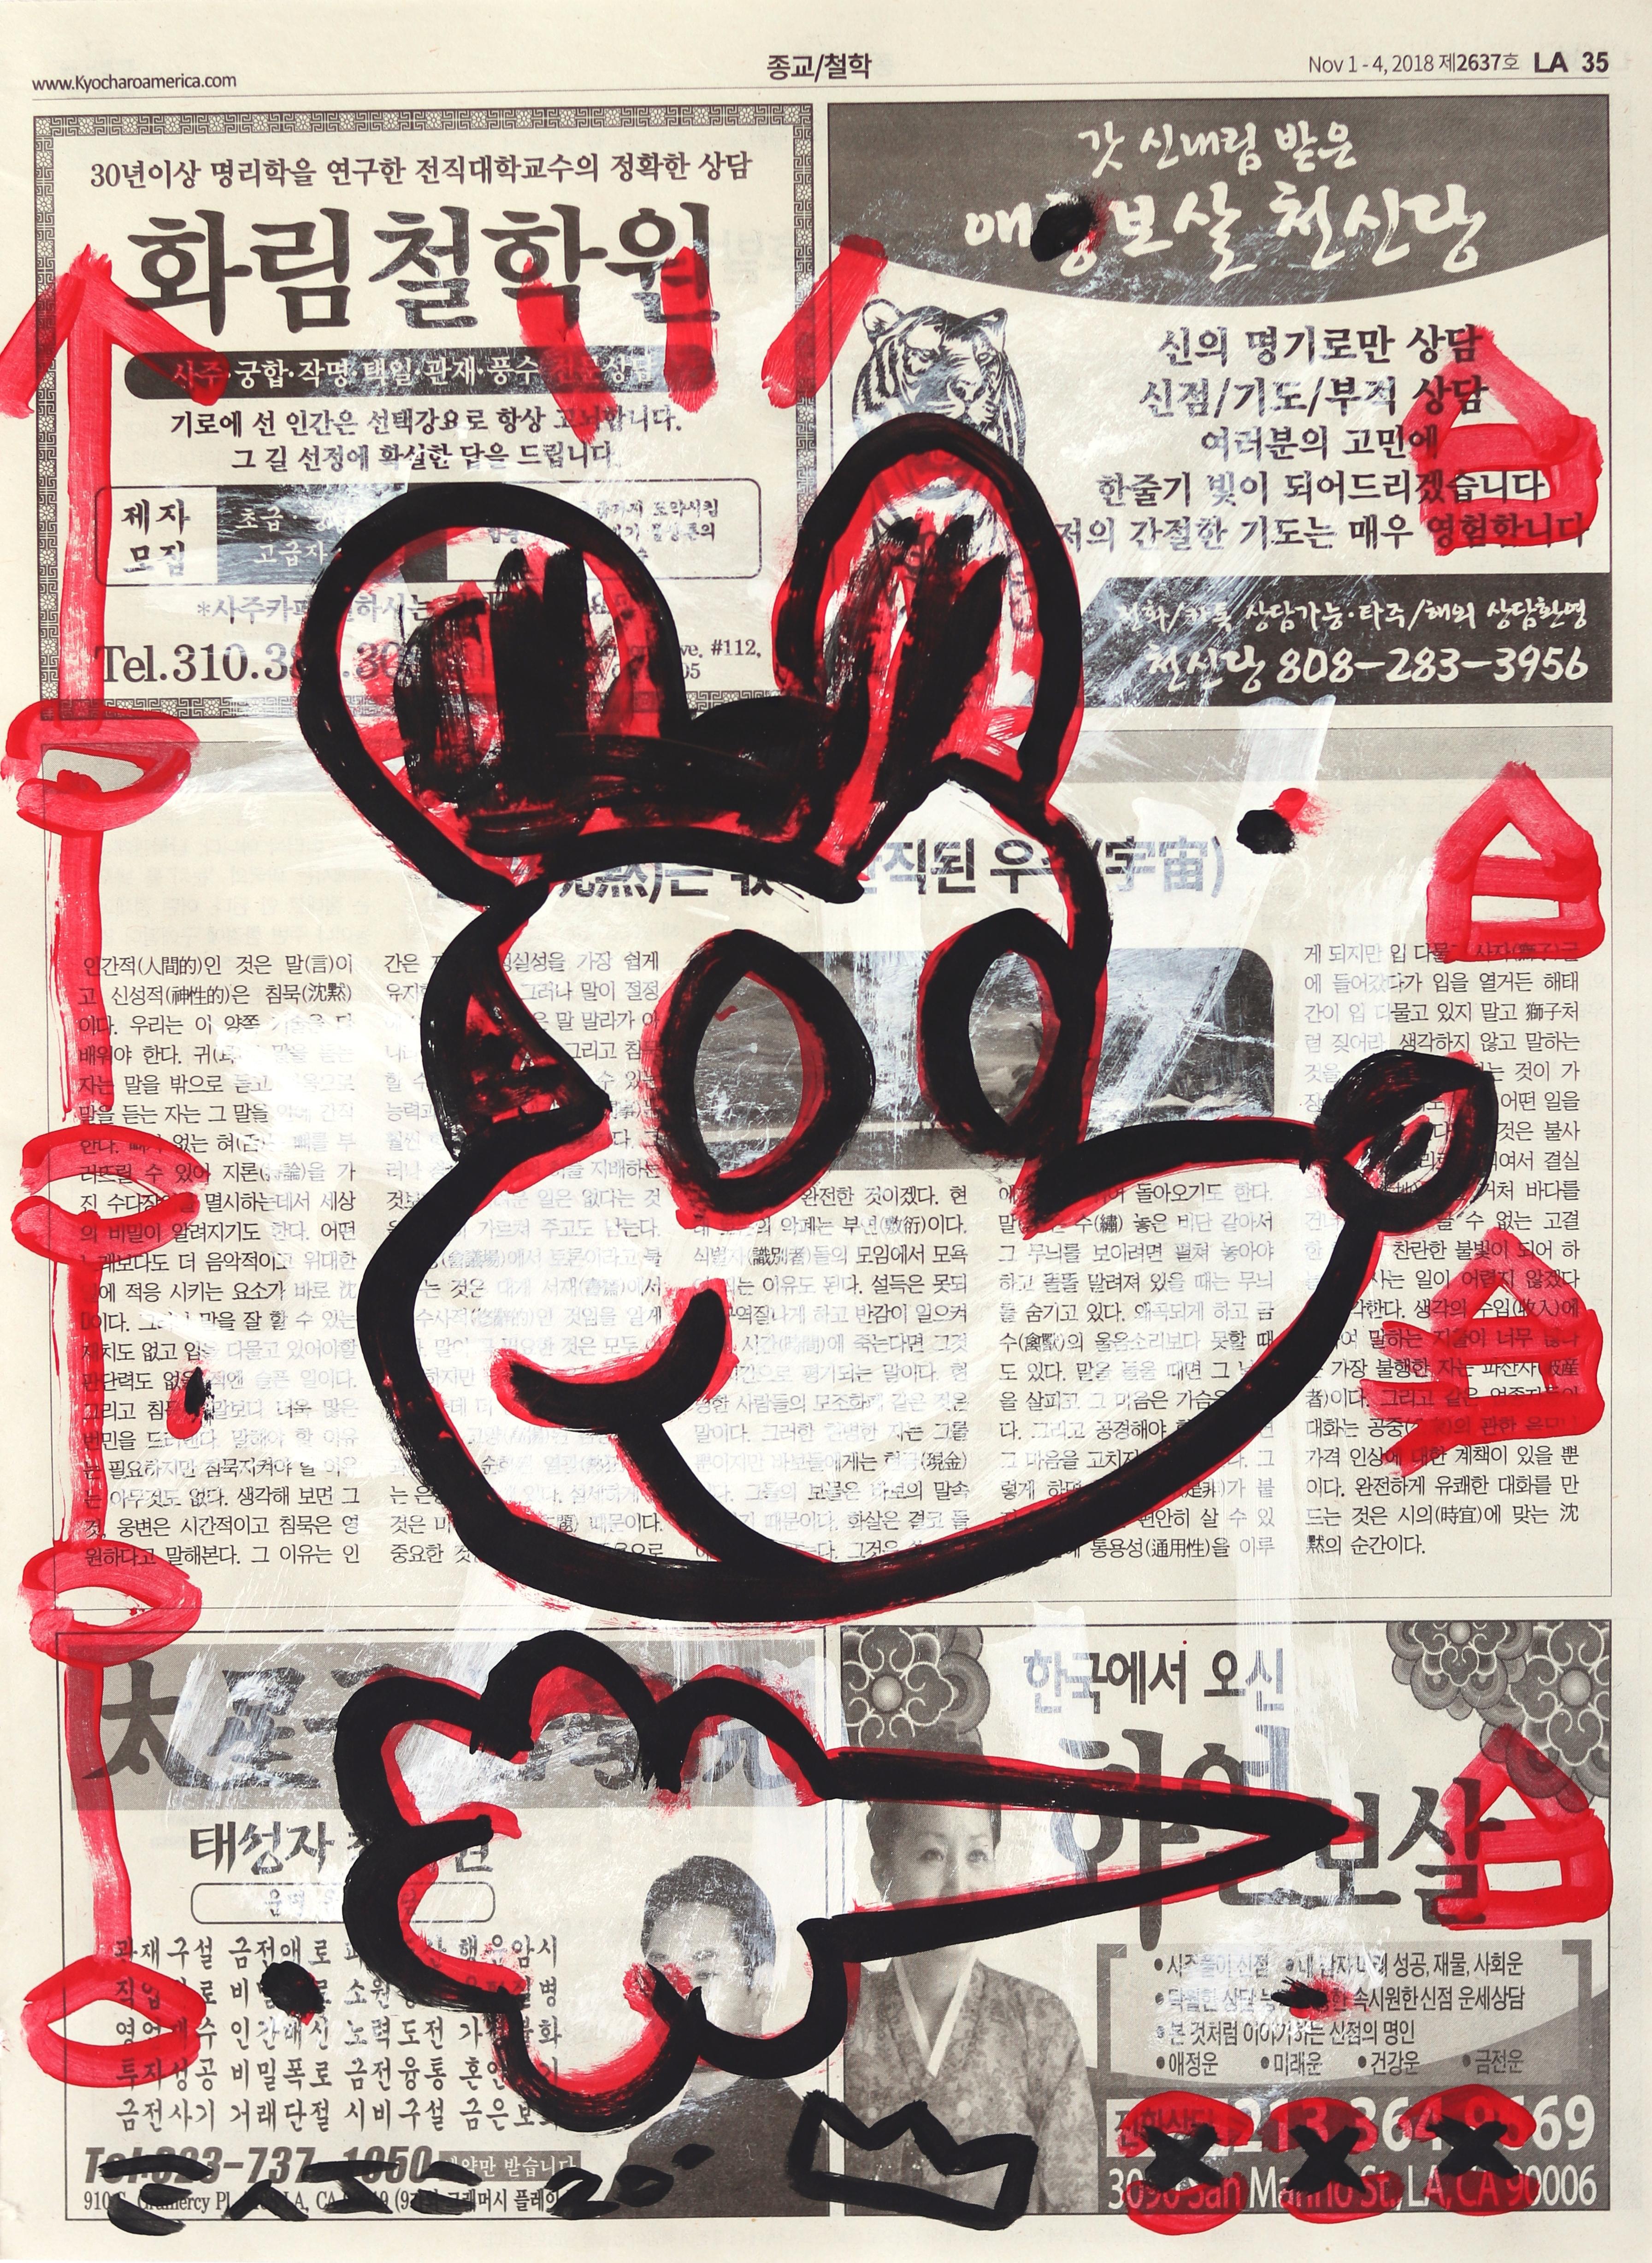 Hmm Yeah Alright - Mickey Inspired Street Art Red and Black Original  - Mixed Media Art by Gary John